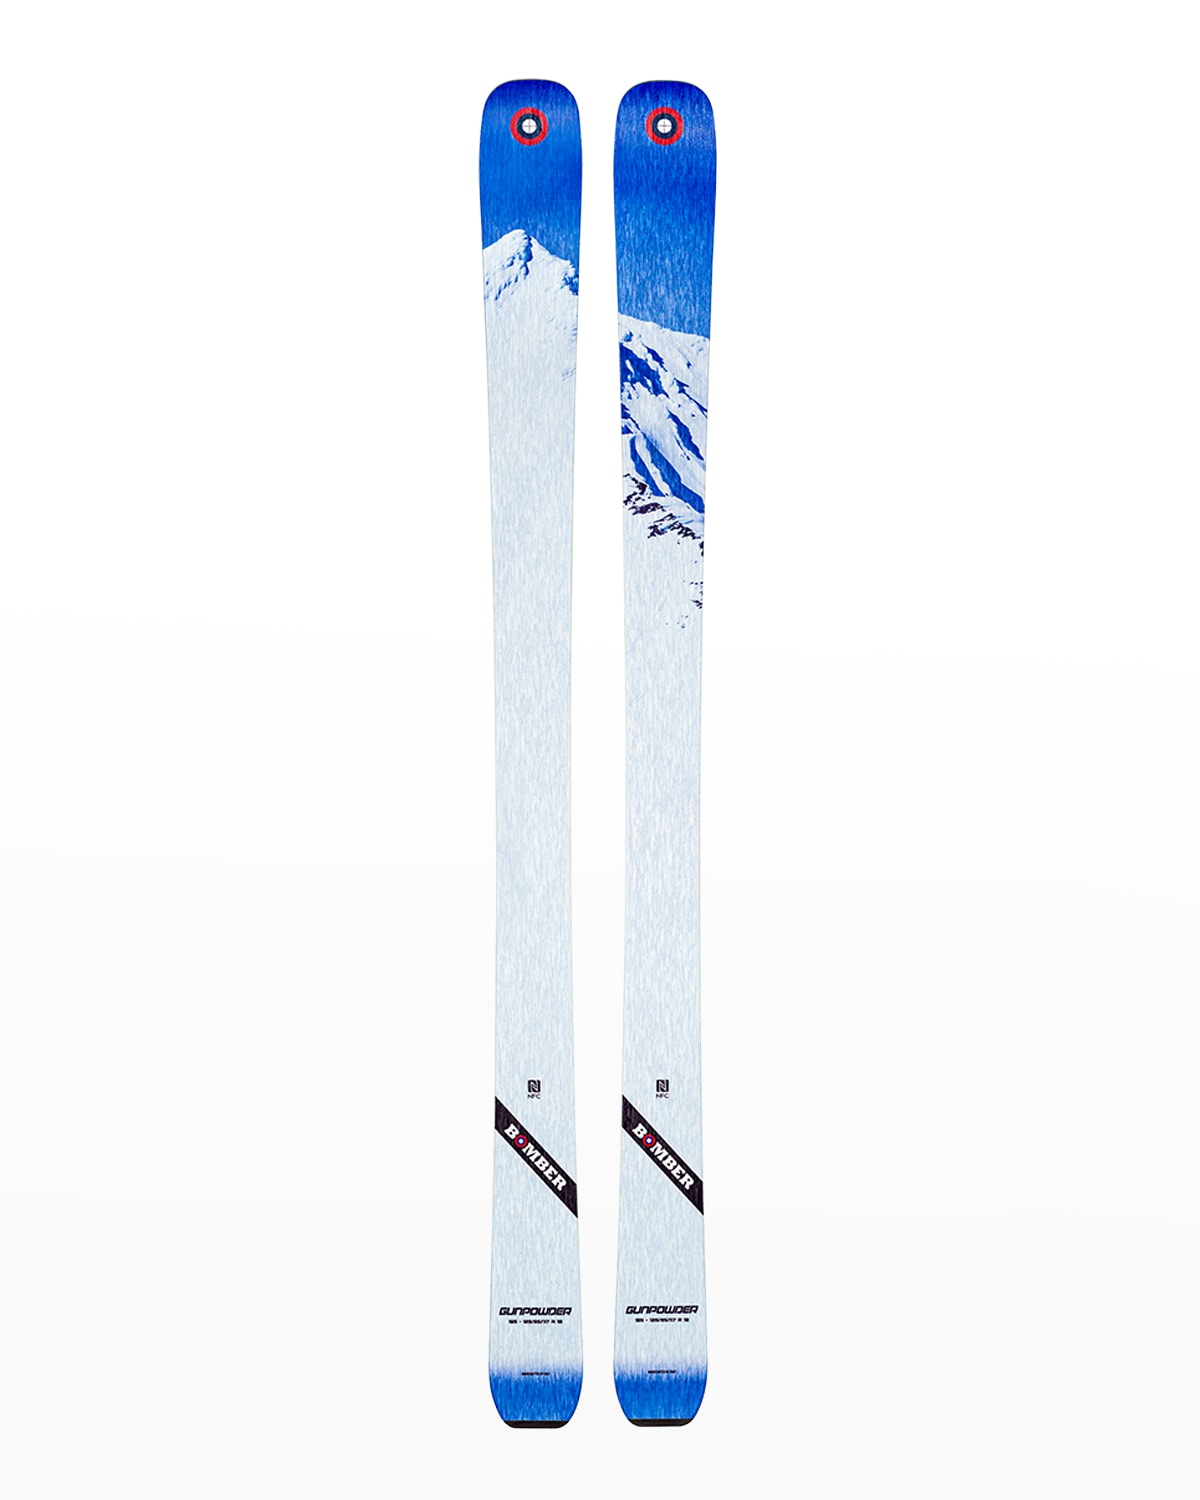 Gunpowder Mountain Range Skis, 175cm